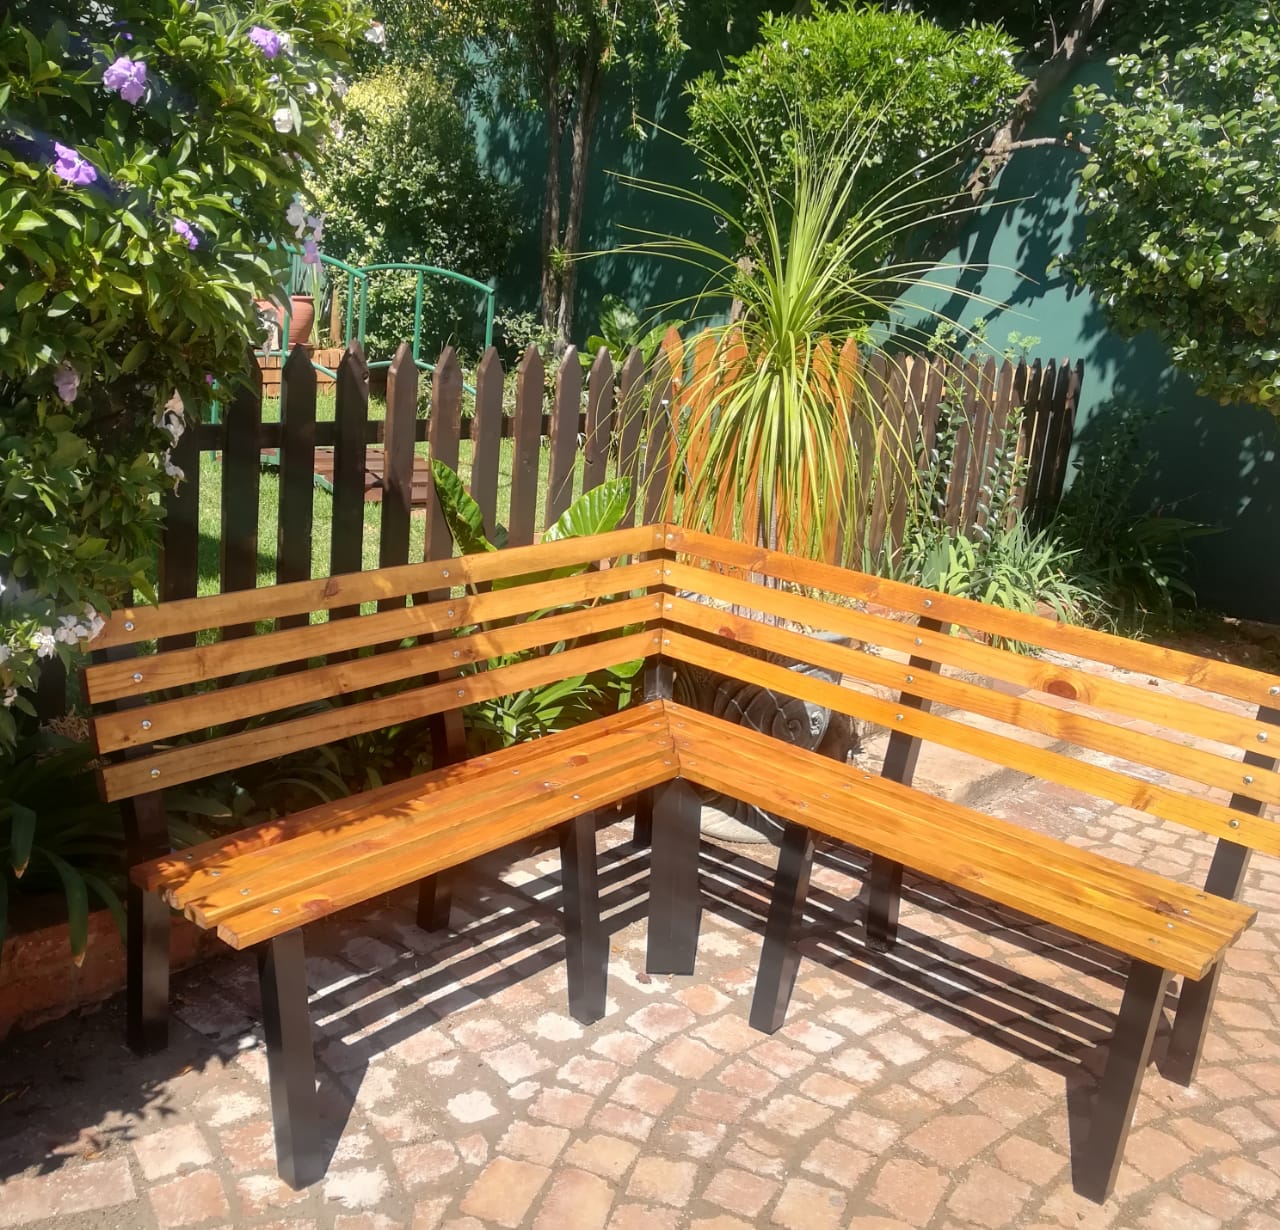 Elegant Outdoor Benches For Garden Seating